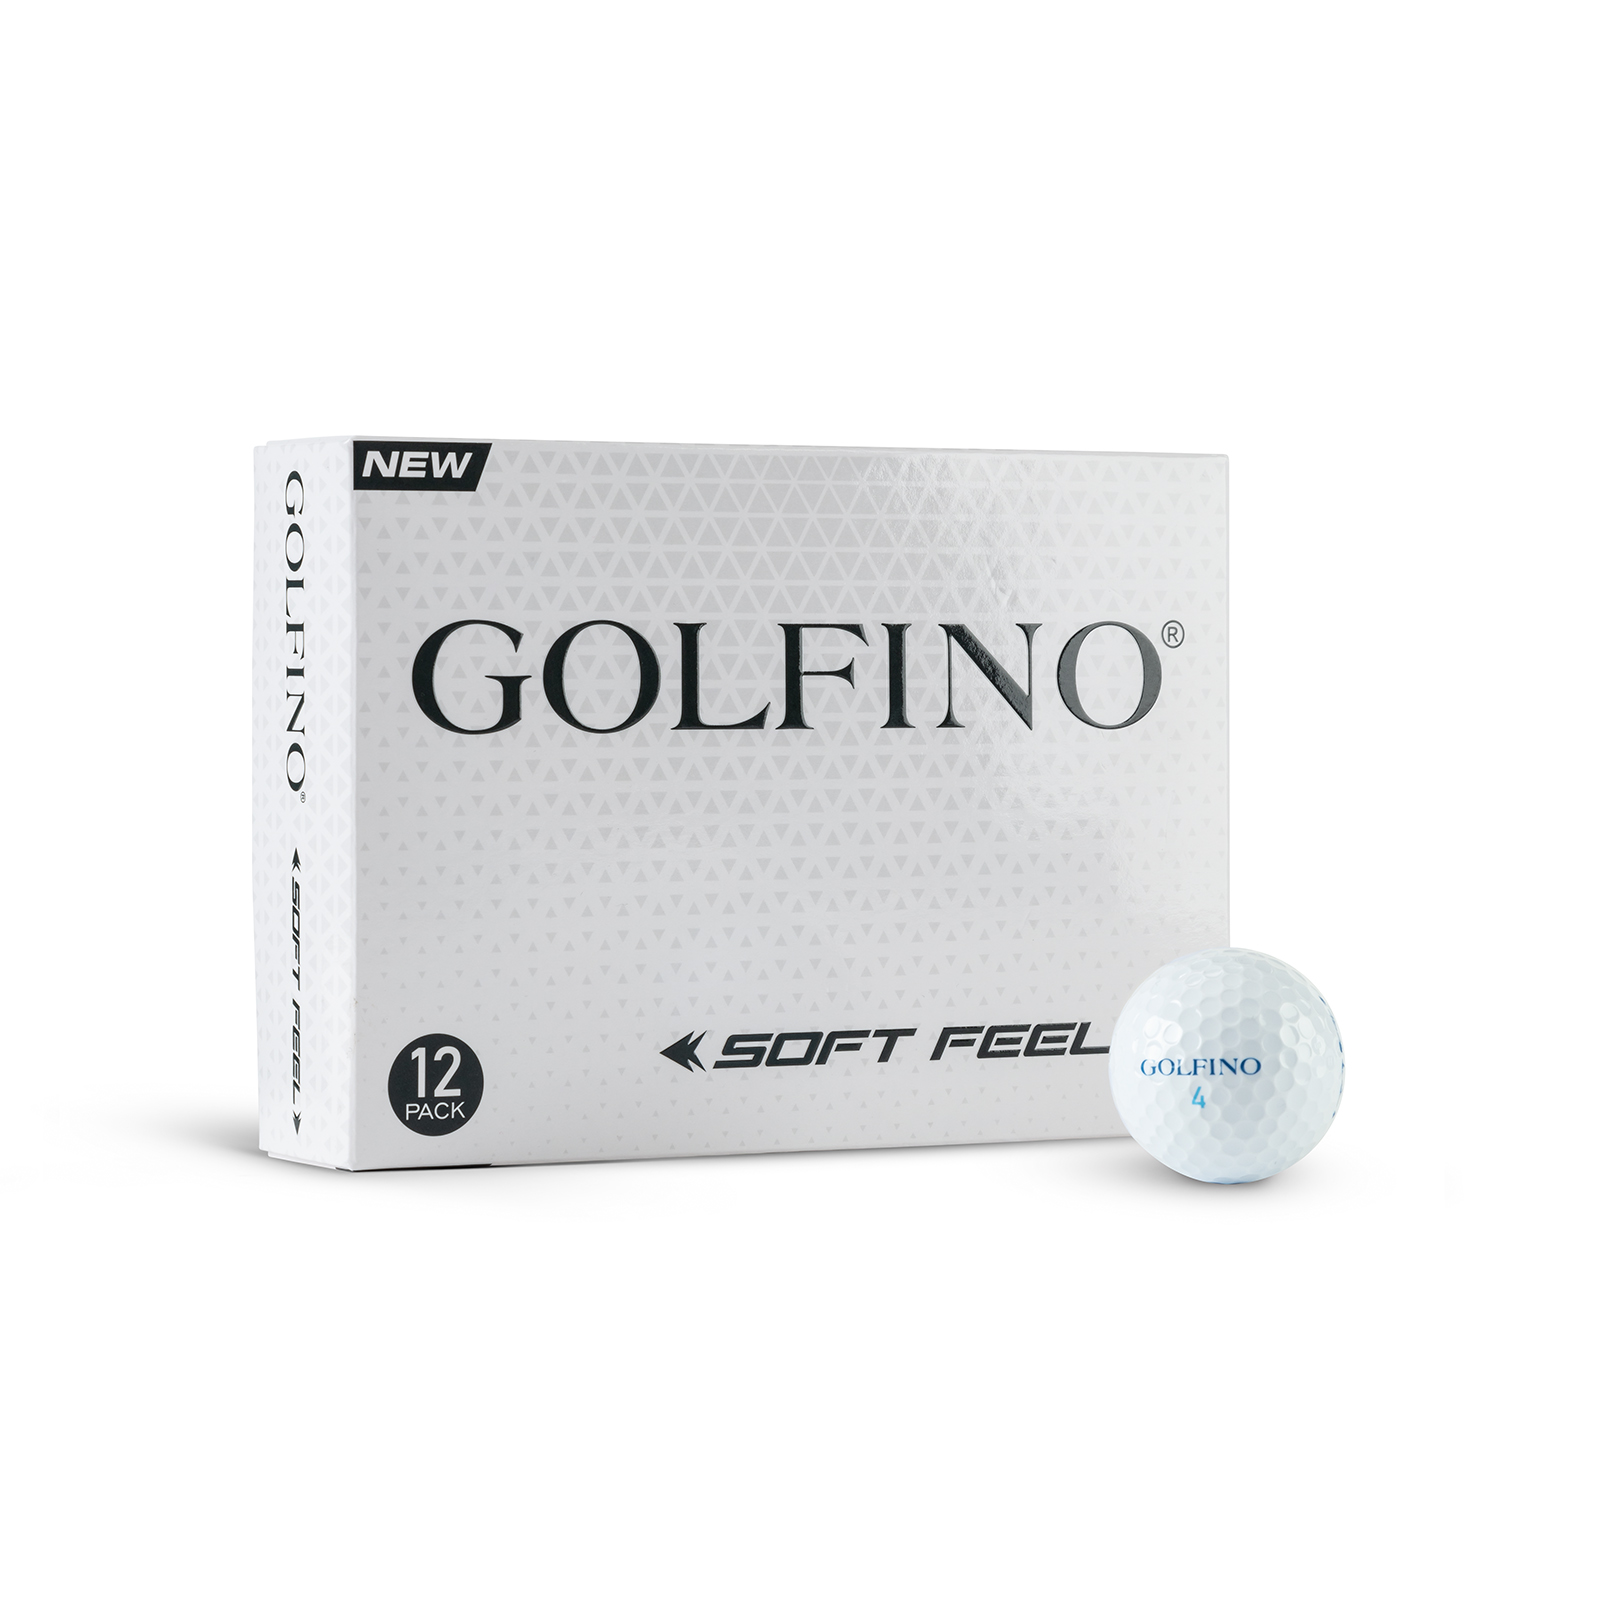 Professional set of golf balls